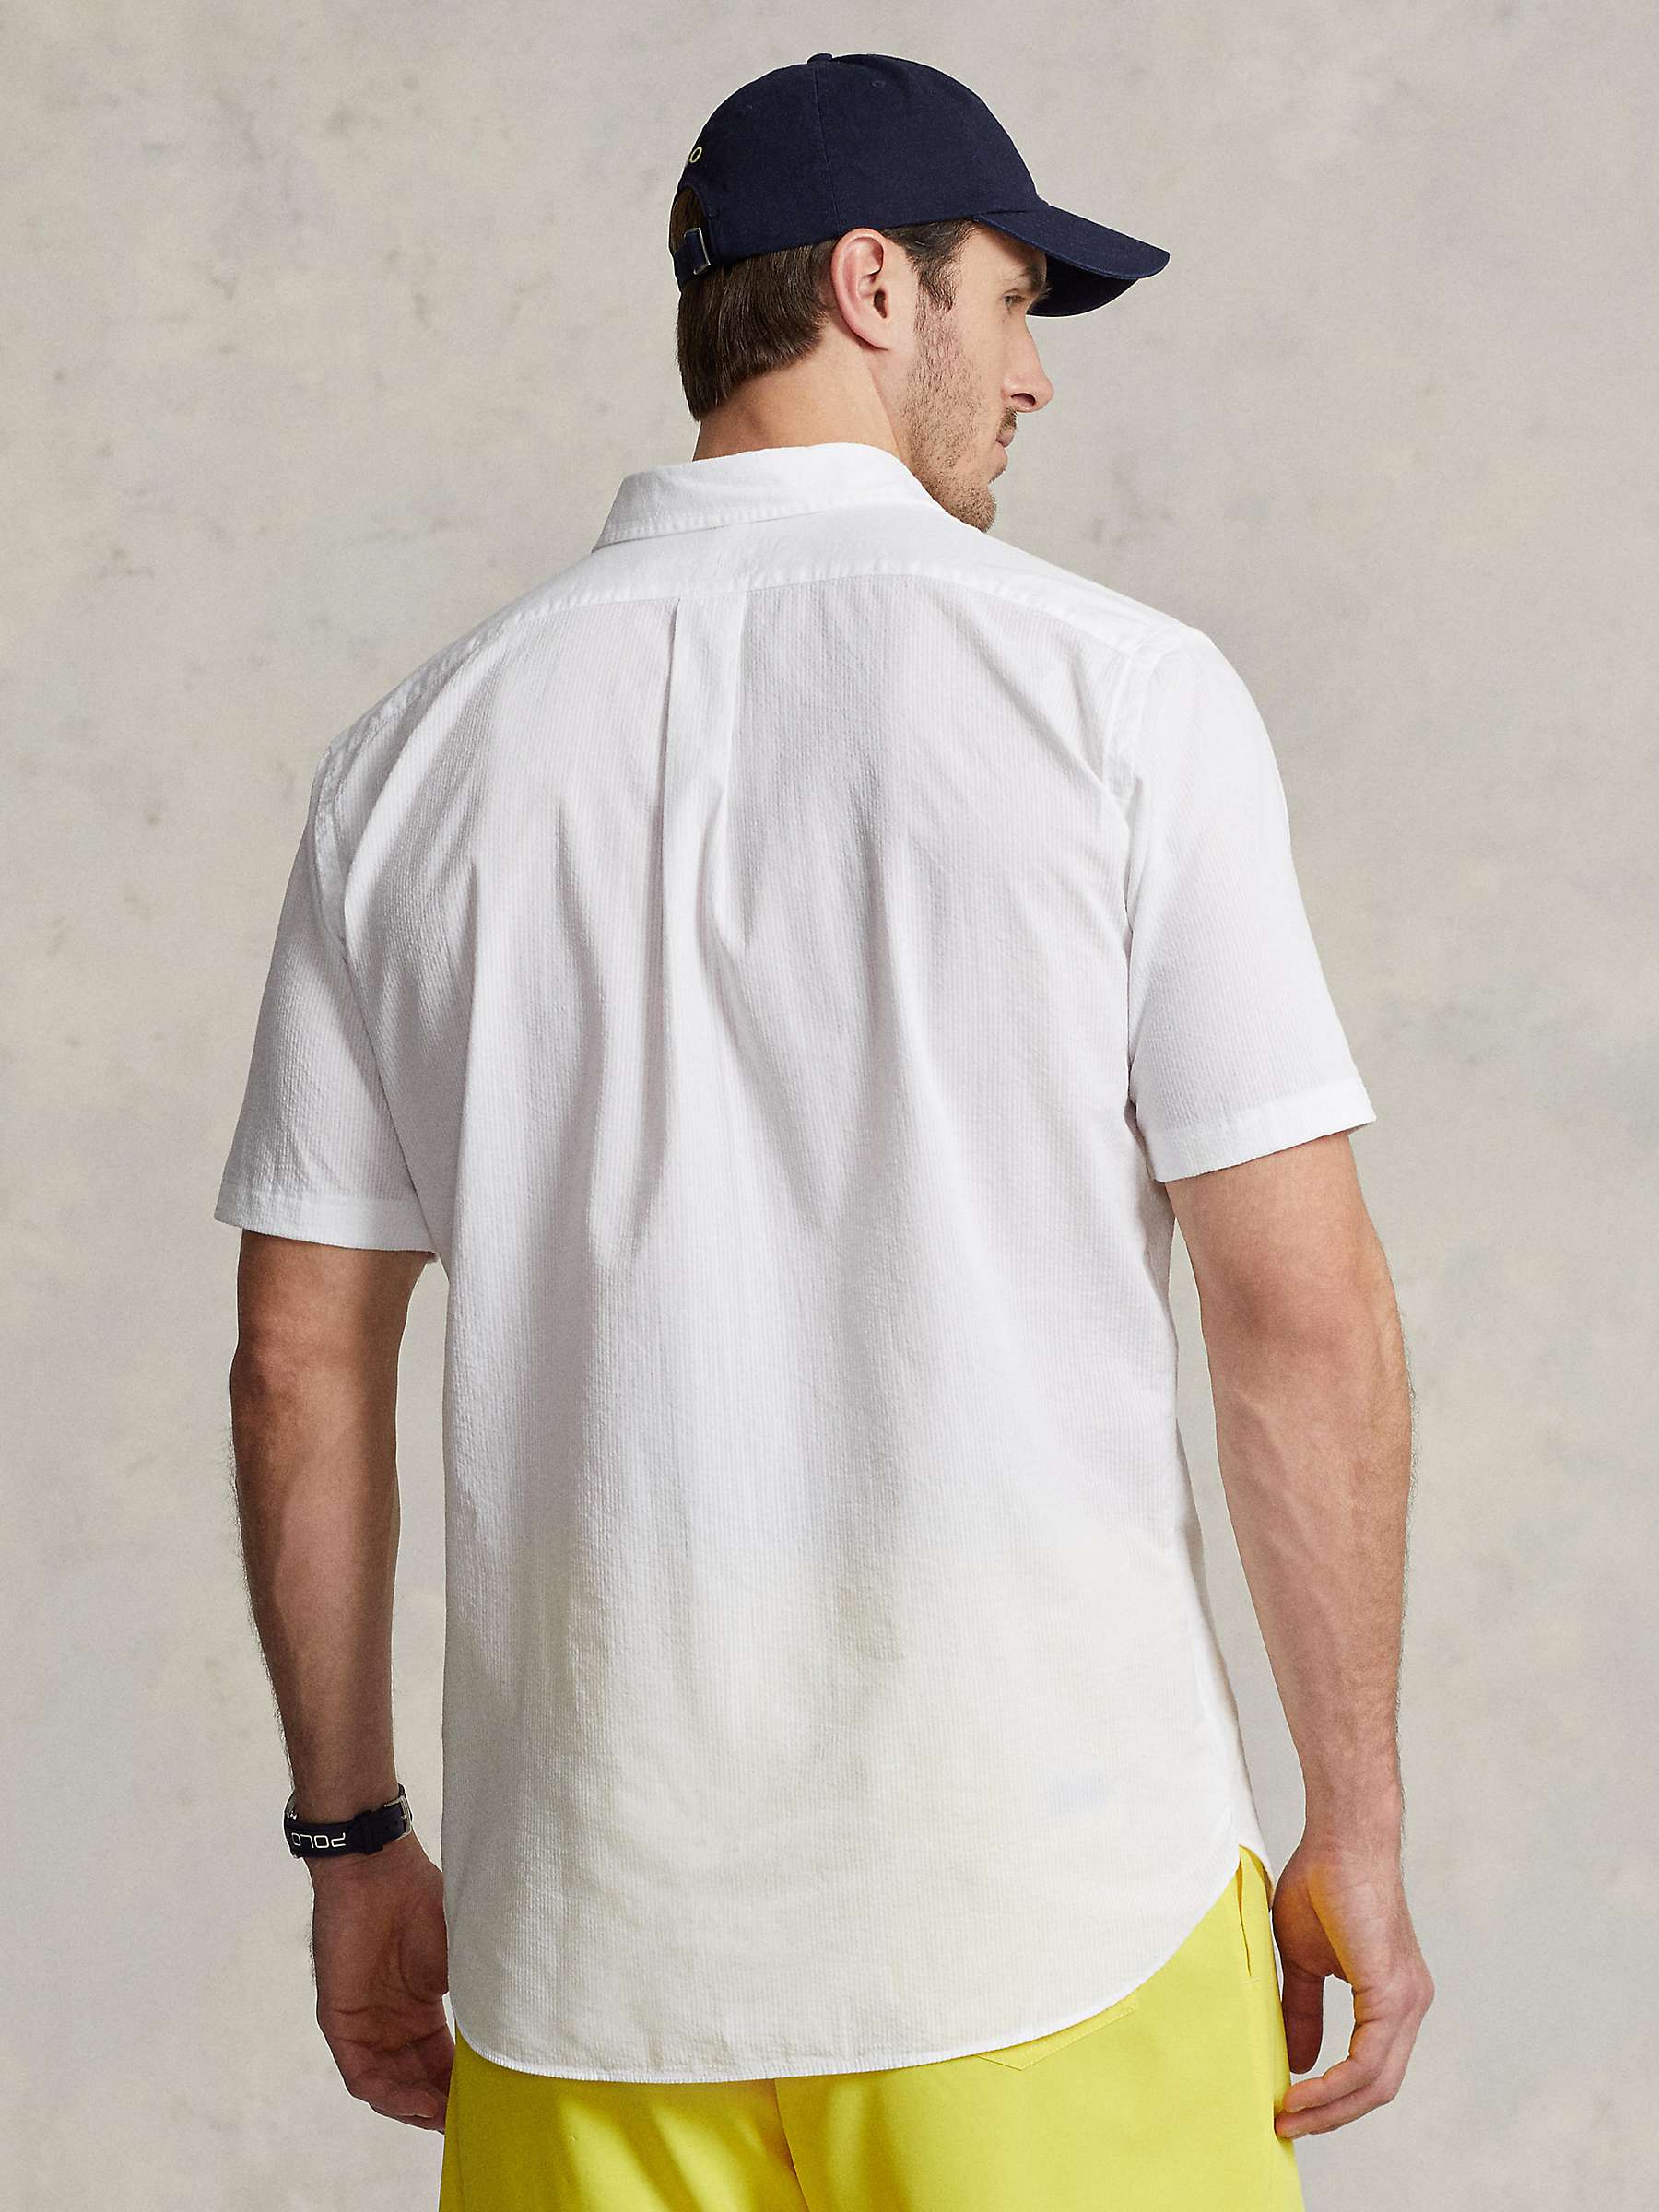 Buy Polo Ralph Lauren Big & Tall Seersucker Shirt Online at johnlewis.com